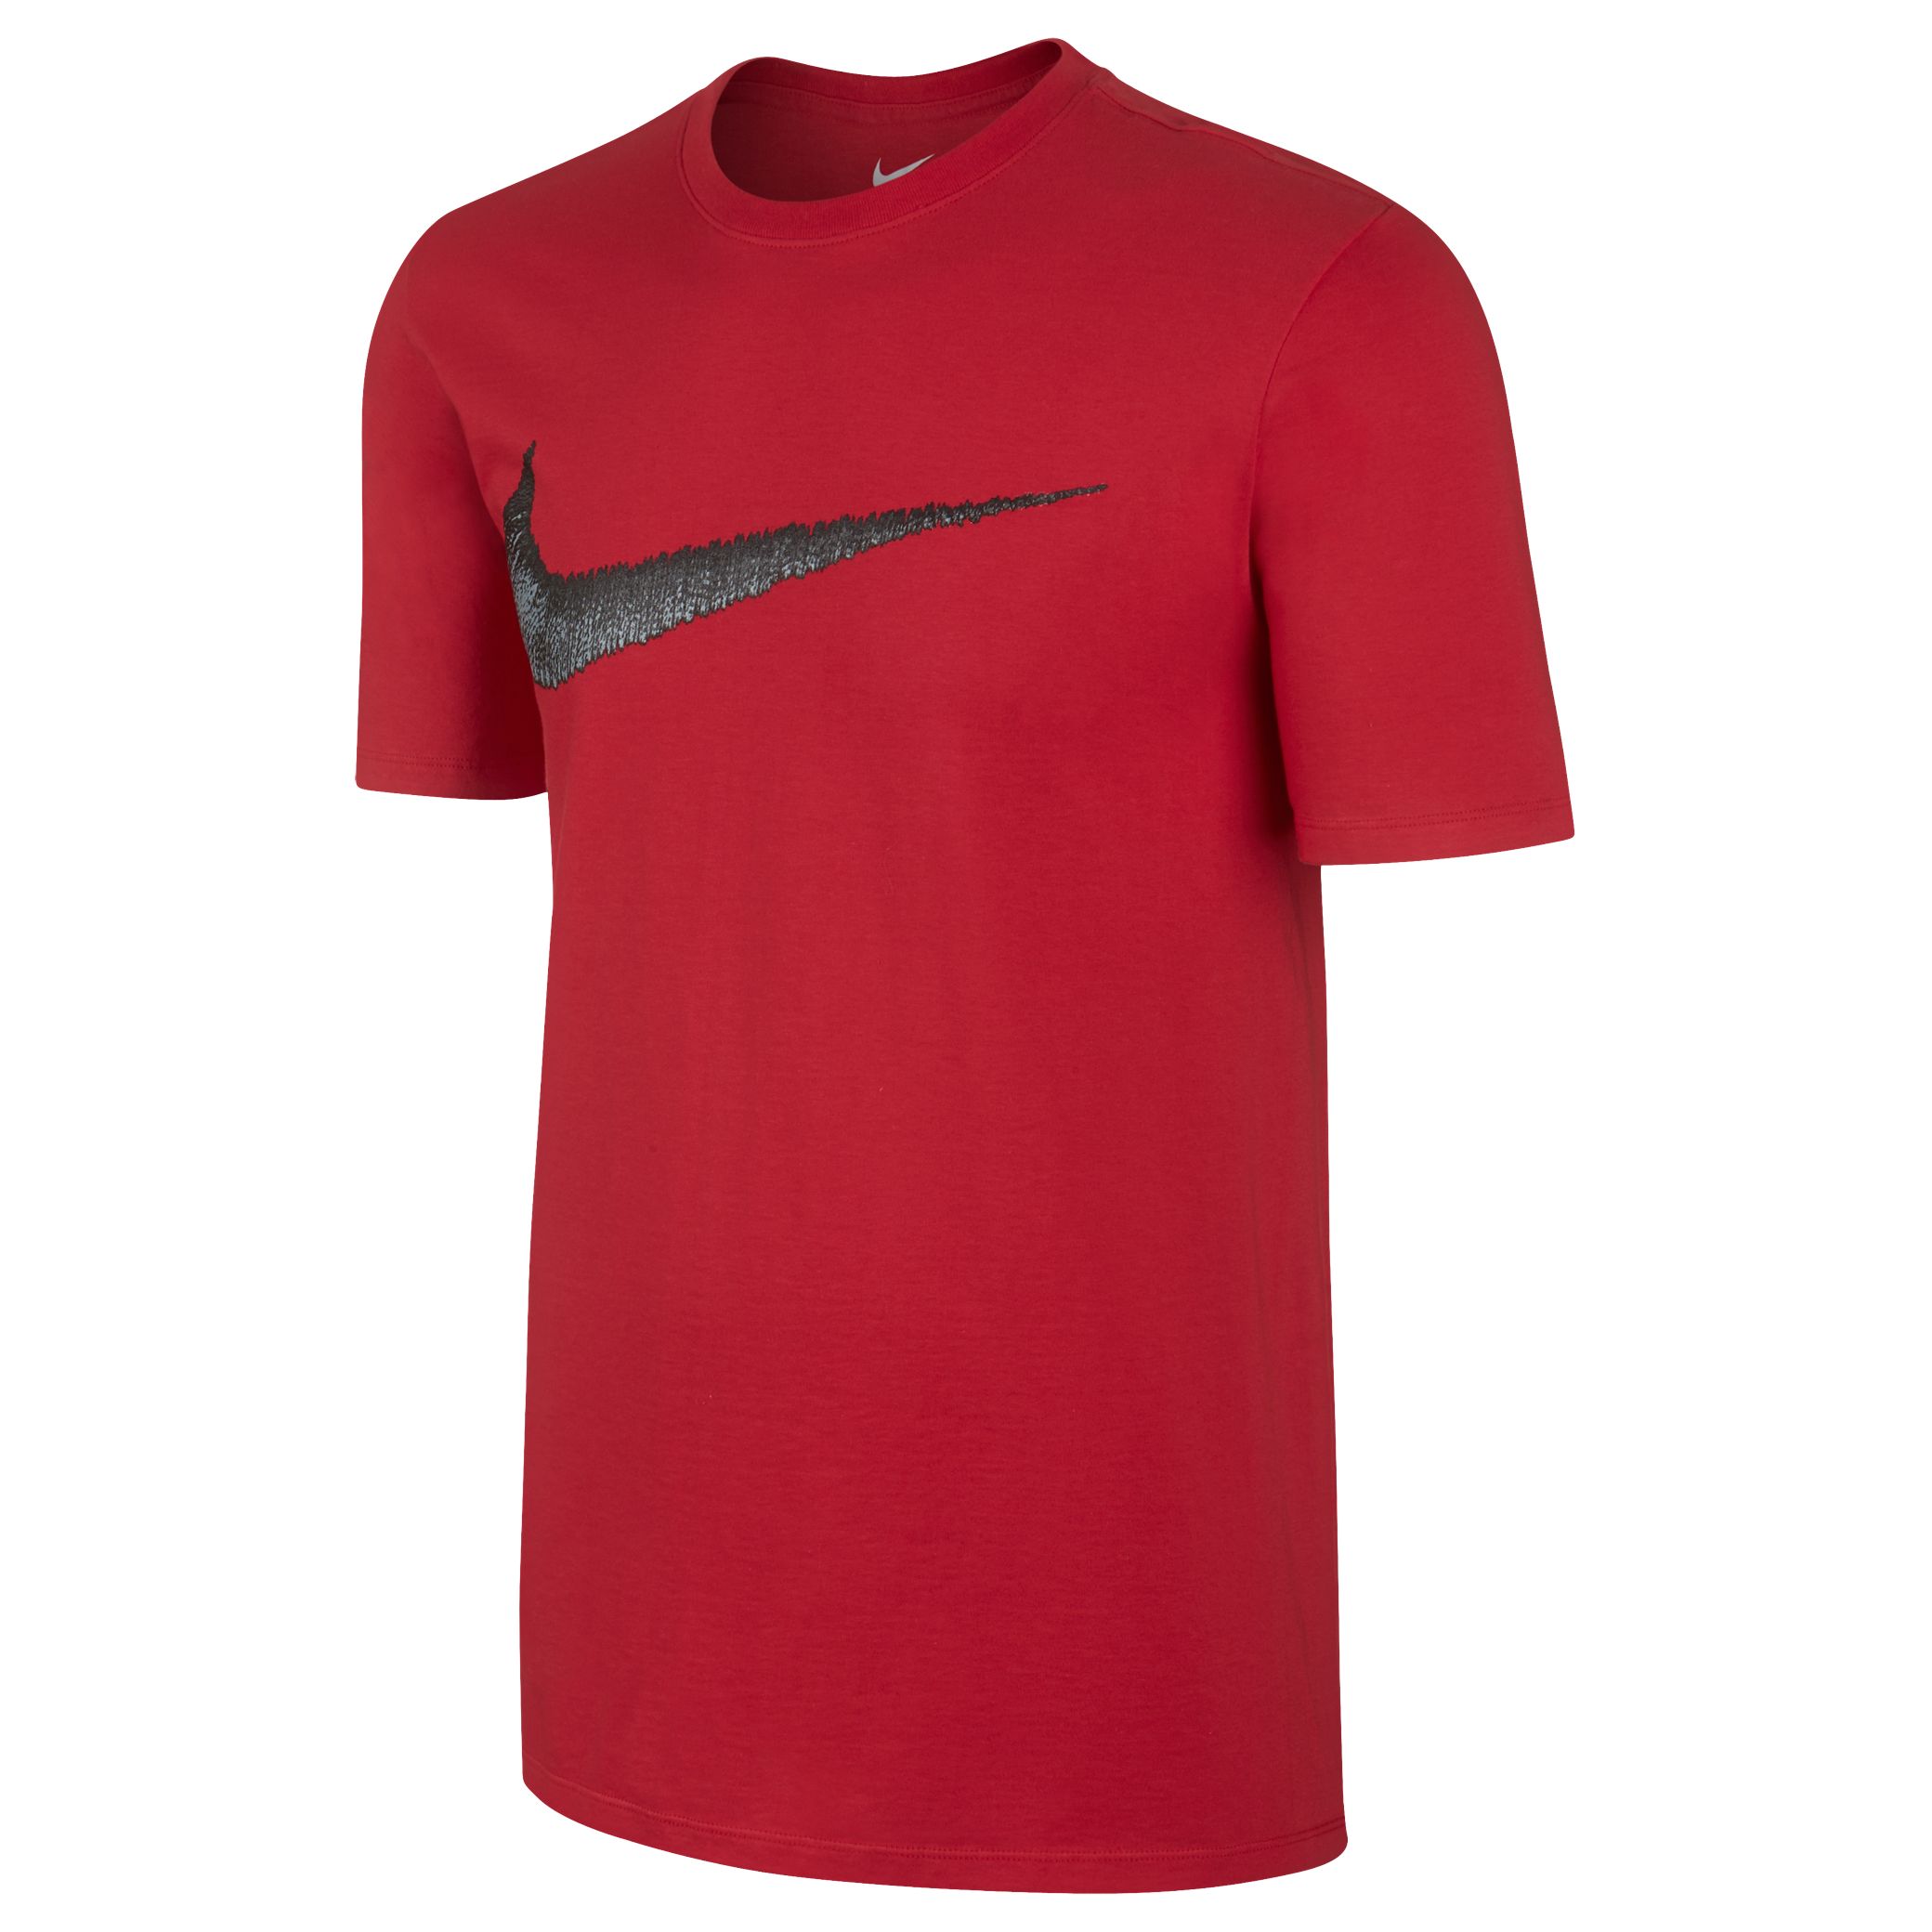 Nike Sportswear Swoosh Cotton T-Shirt, Red/Black, M